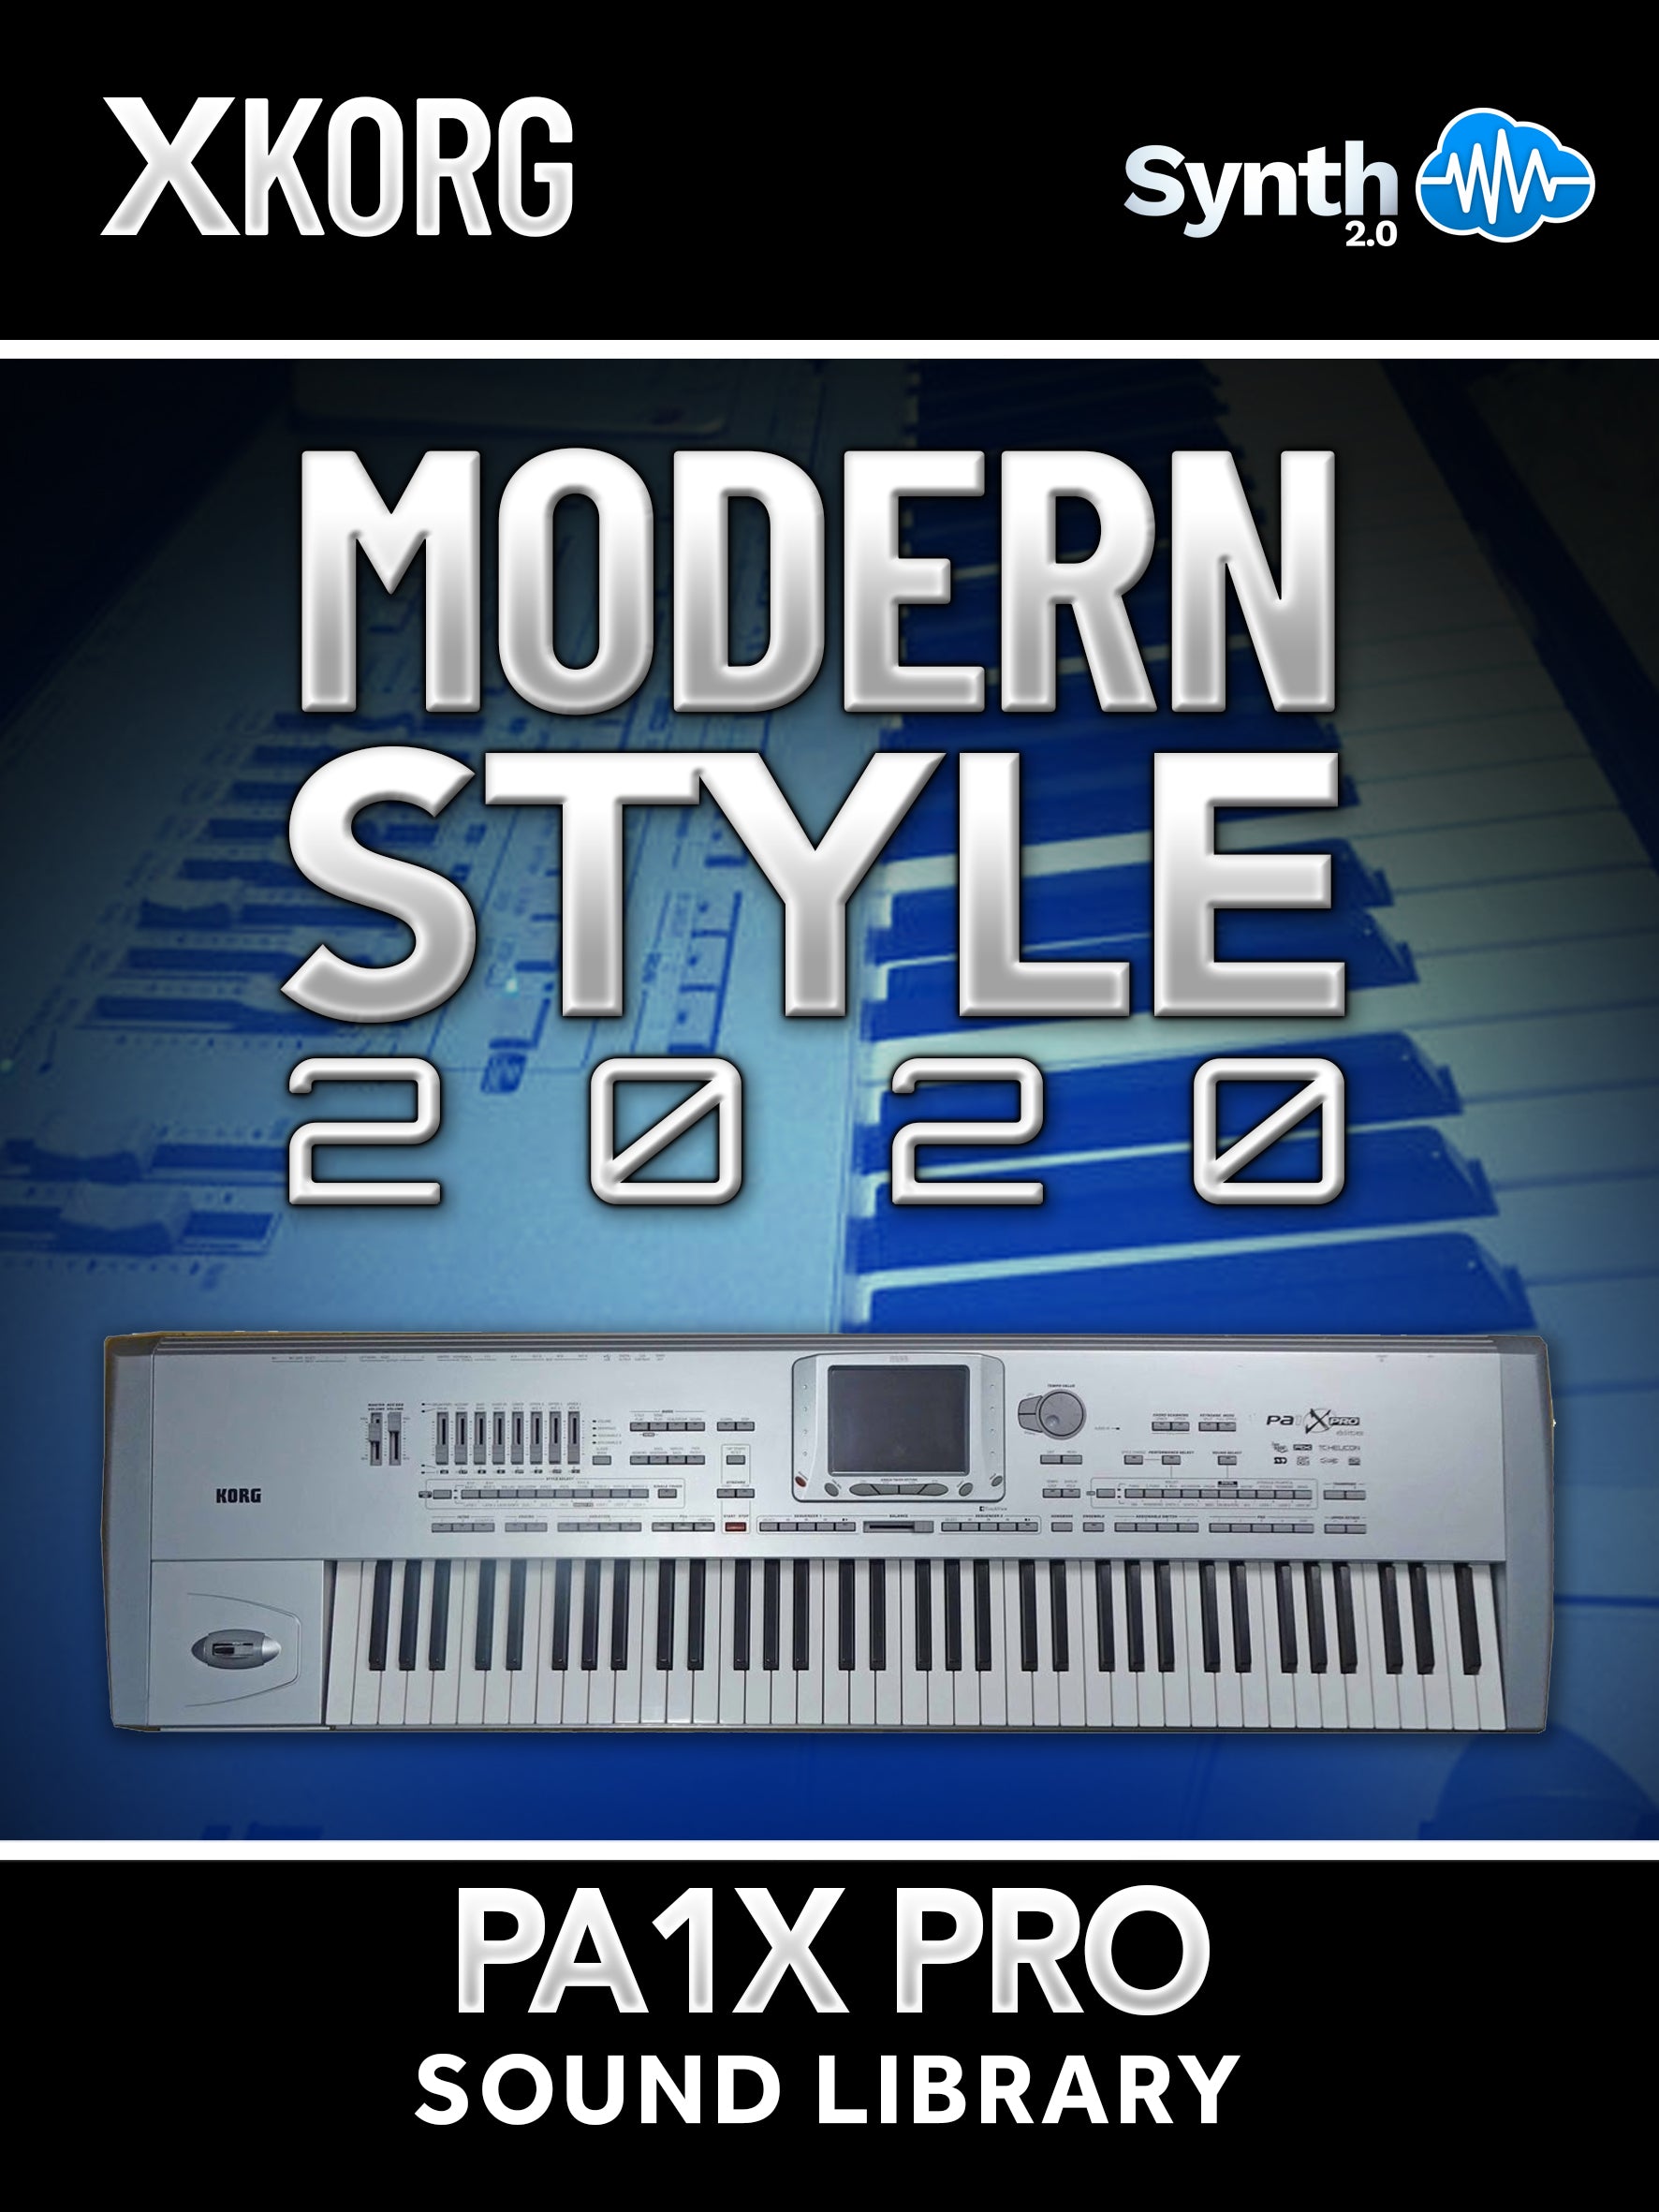 SCL170 - Modern Styles 2020 - Korg PA1x Pro ( 10 styles )